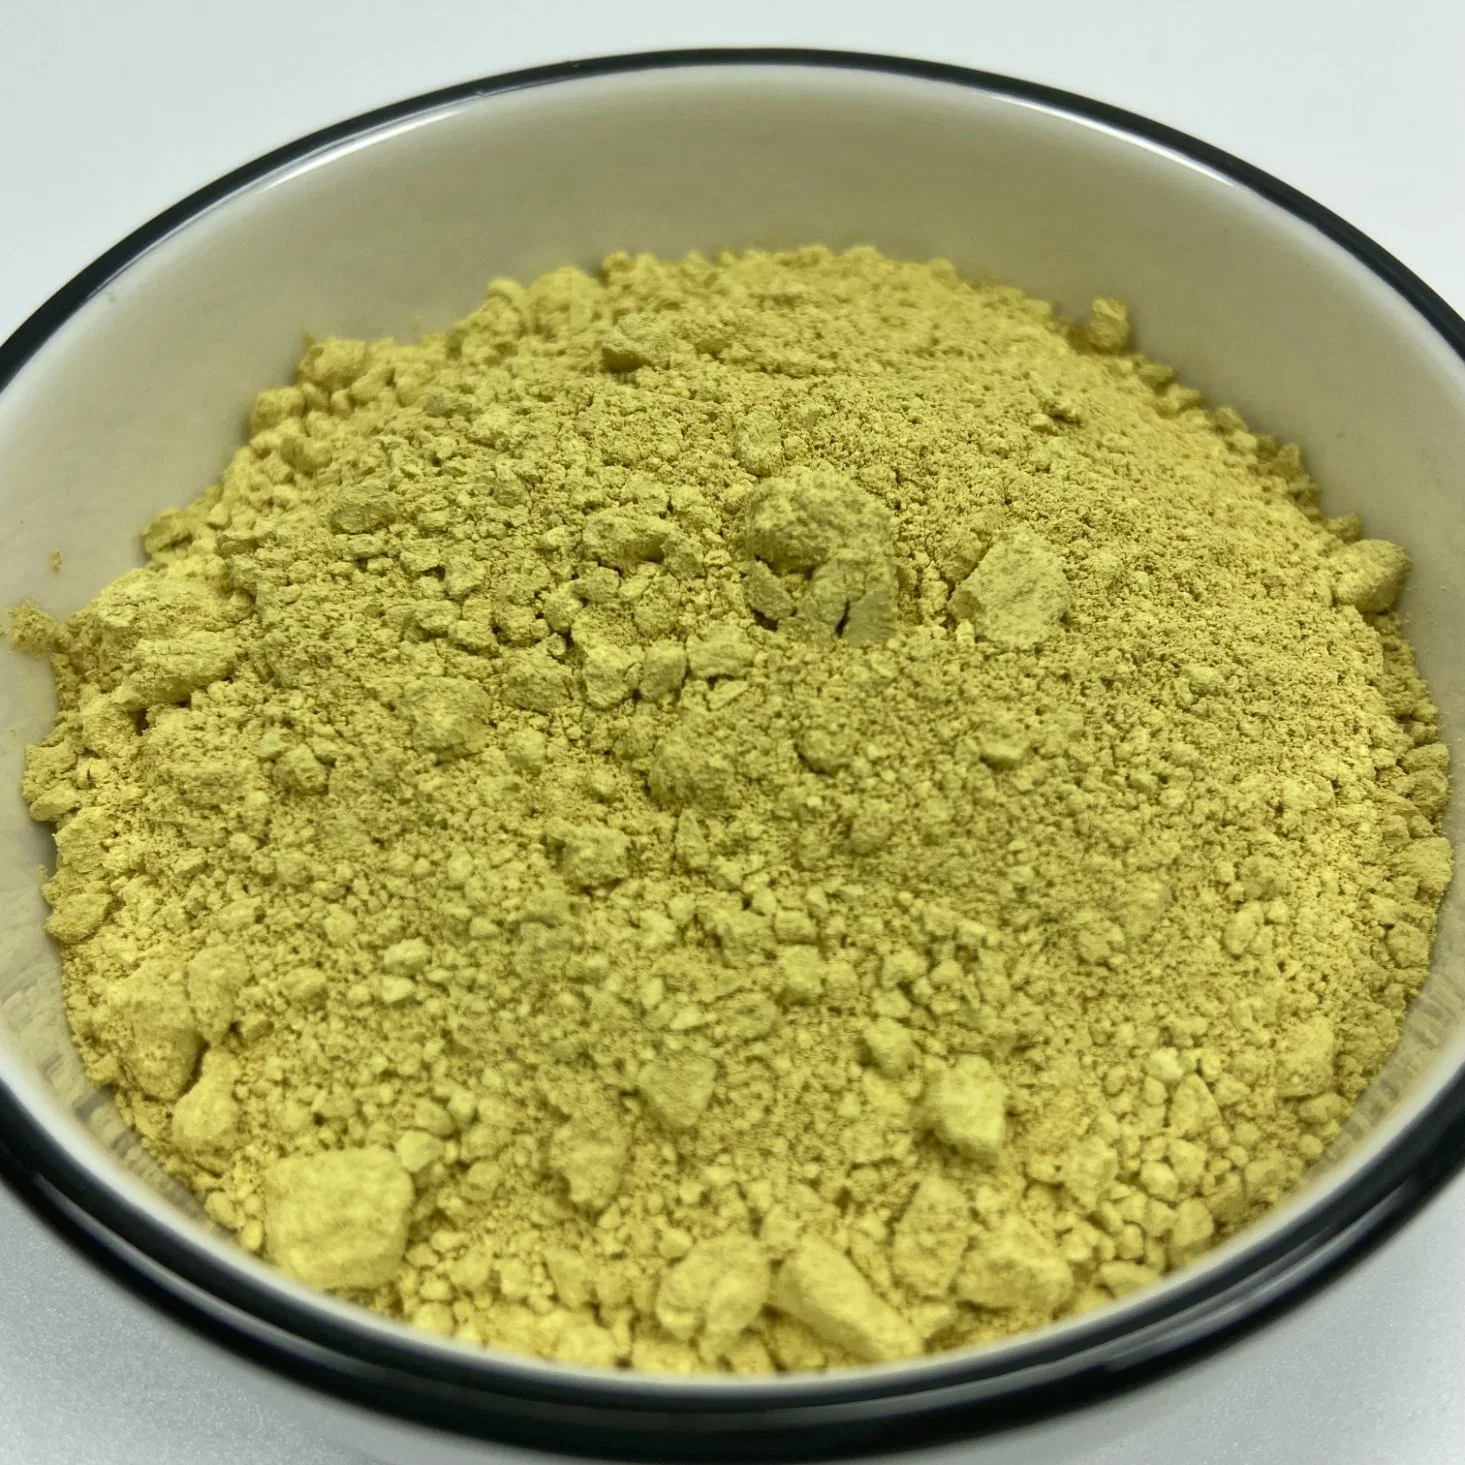 Entrega rápida de cromato de potasio en polvo amarillo